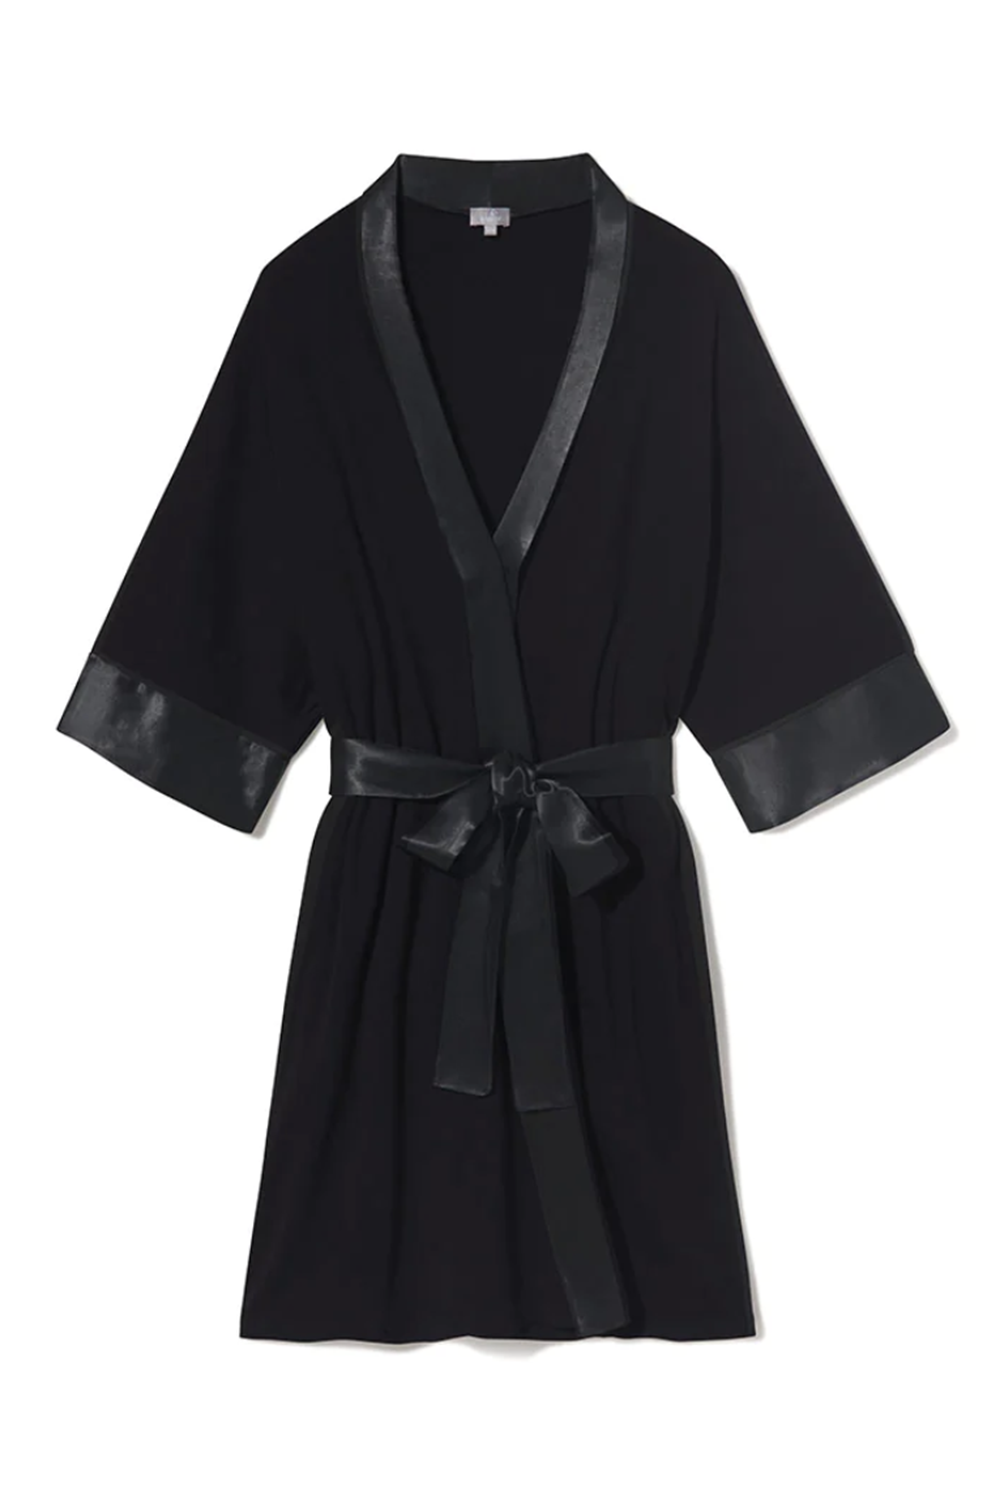 Shala Kimono Robe - Black